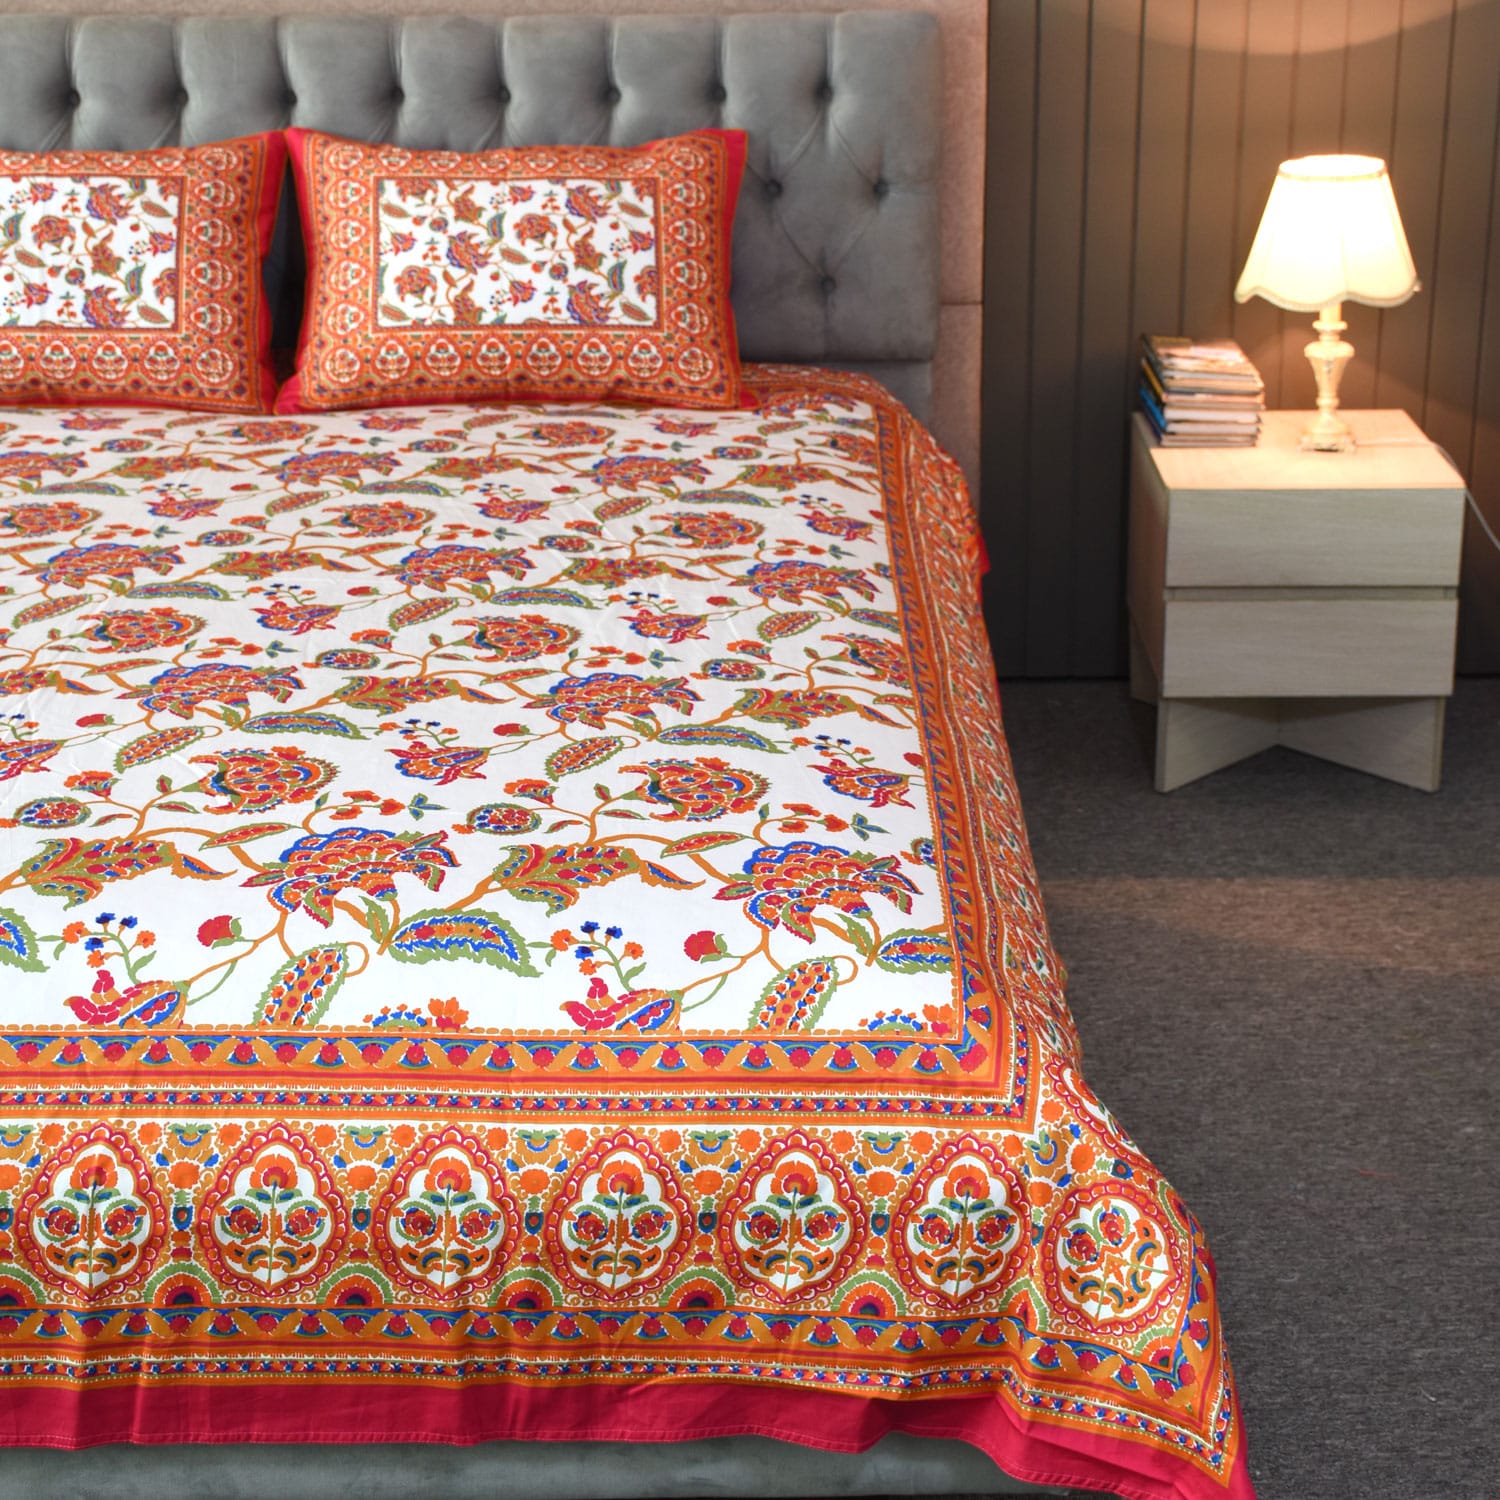 Blossom Dreams Print Bed Sheet – Persian Red